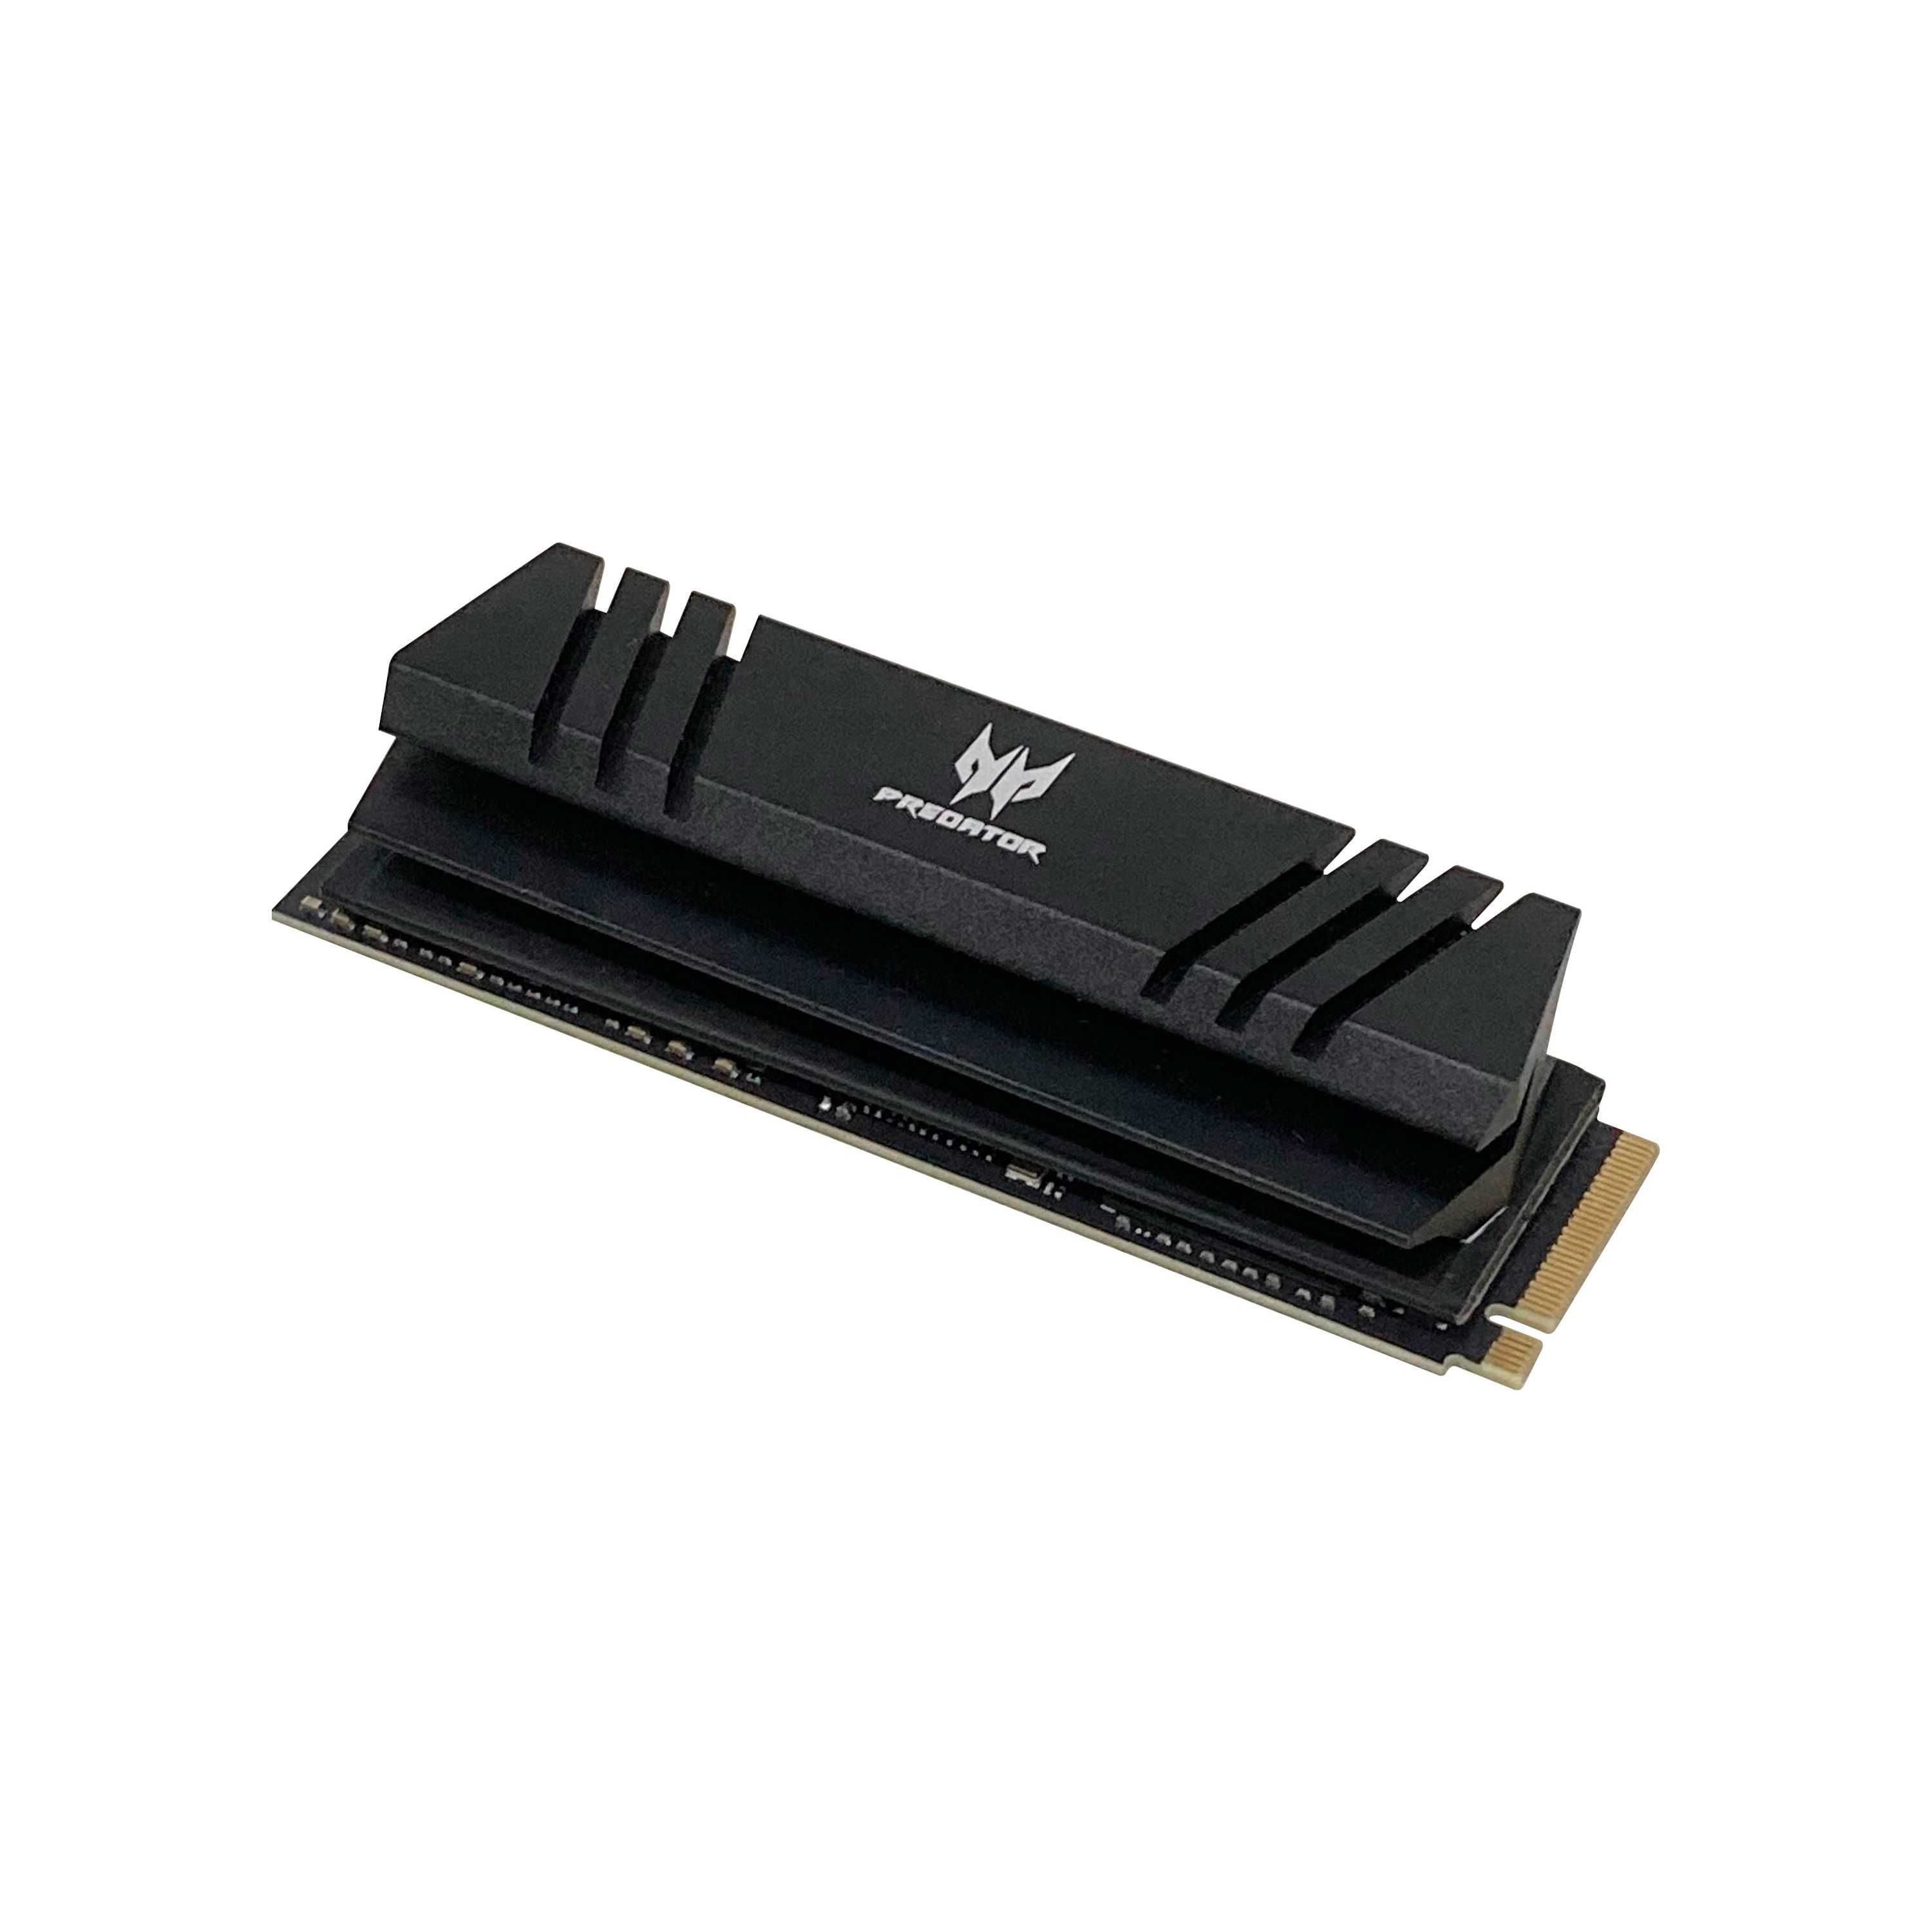 Acer Predator GM7000 2TB M.2 2280 PCIe Gen4x4 SSD固態硬碟(公司貨)